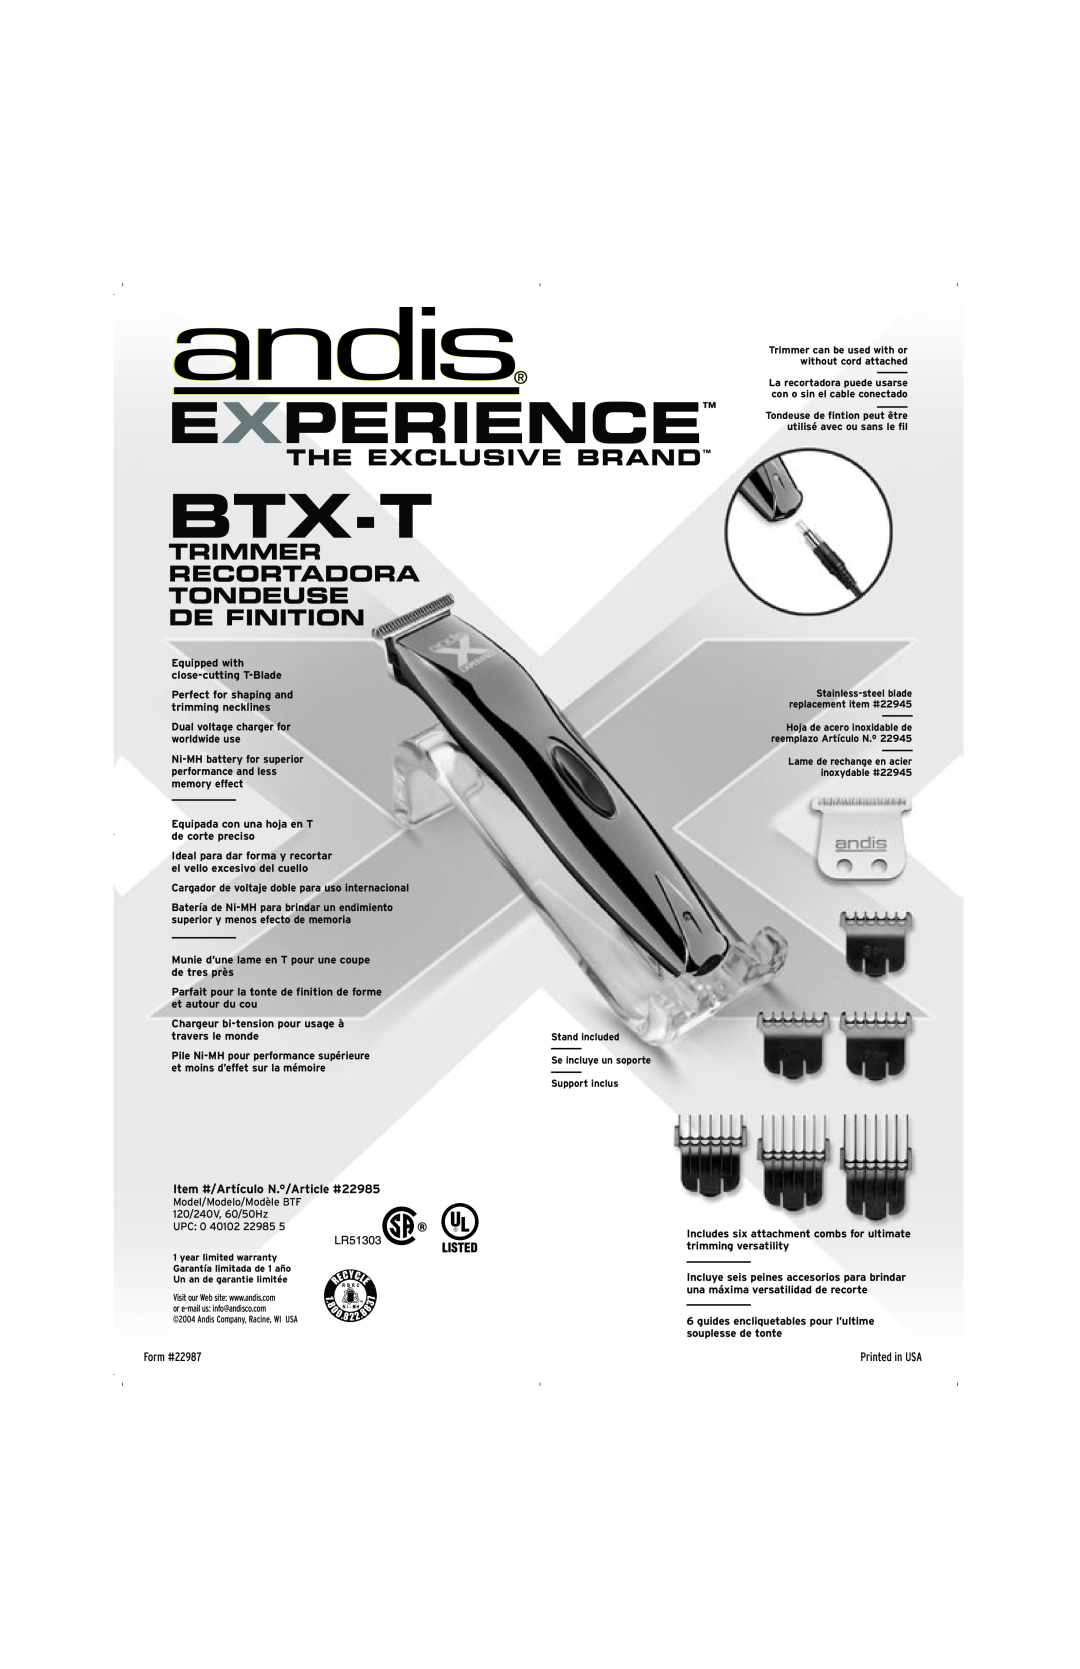 Andis Company BTX-T manual Btx-T, Experience, The Exclusive Brand, Trimmer Recortadora Tondeuse De Finition, Form #22987 